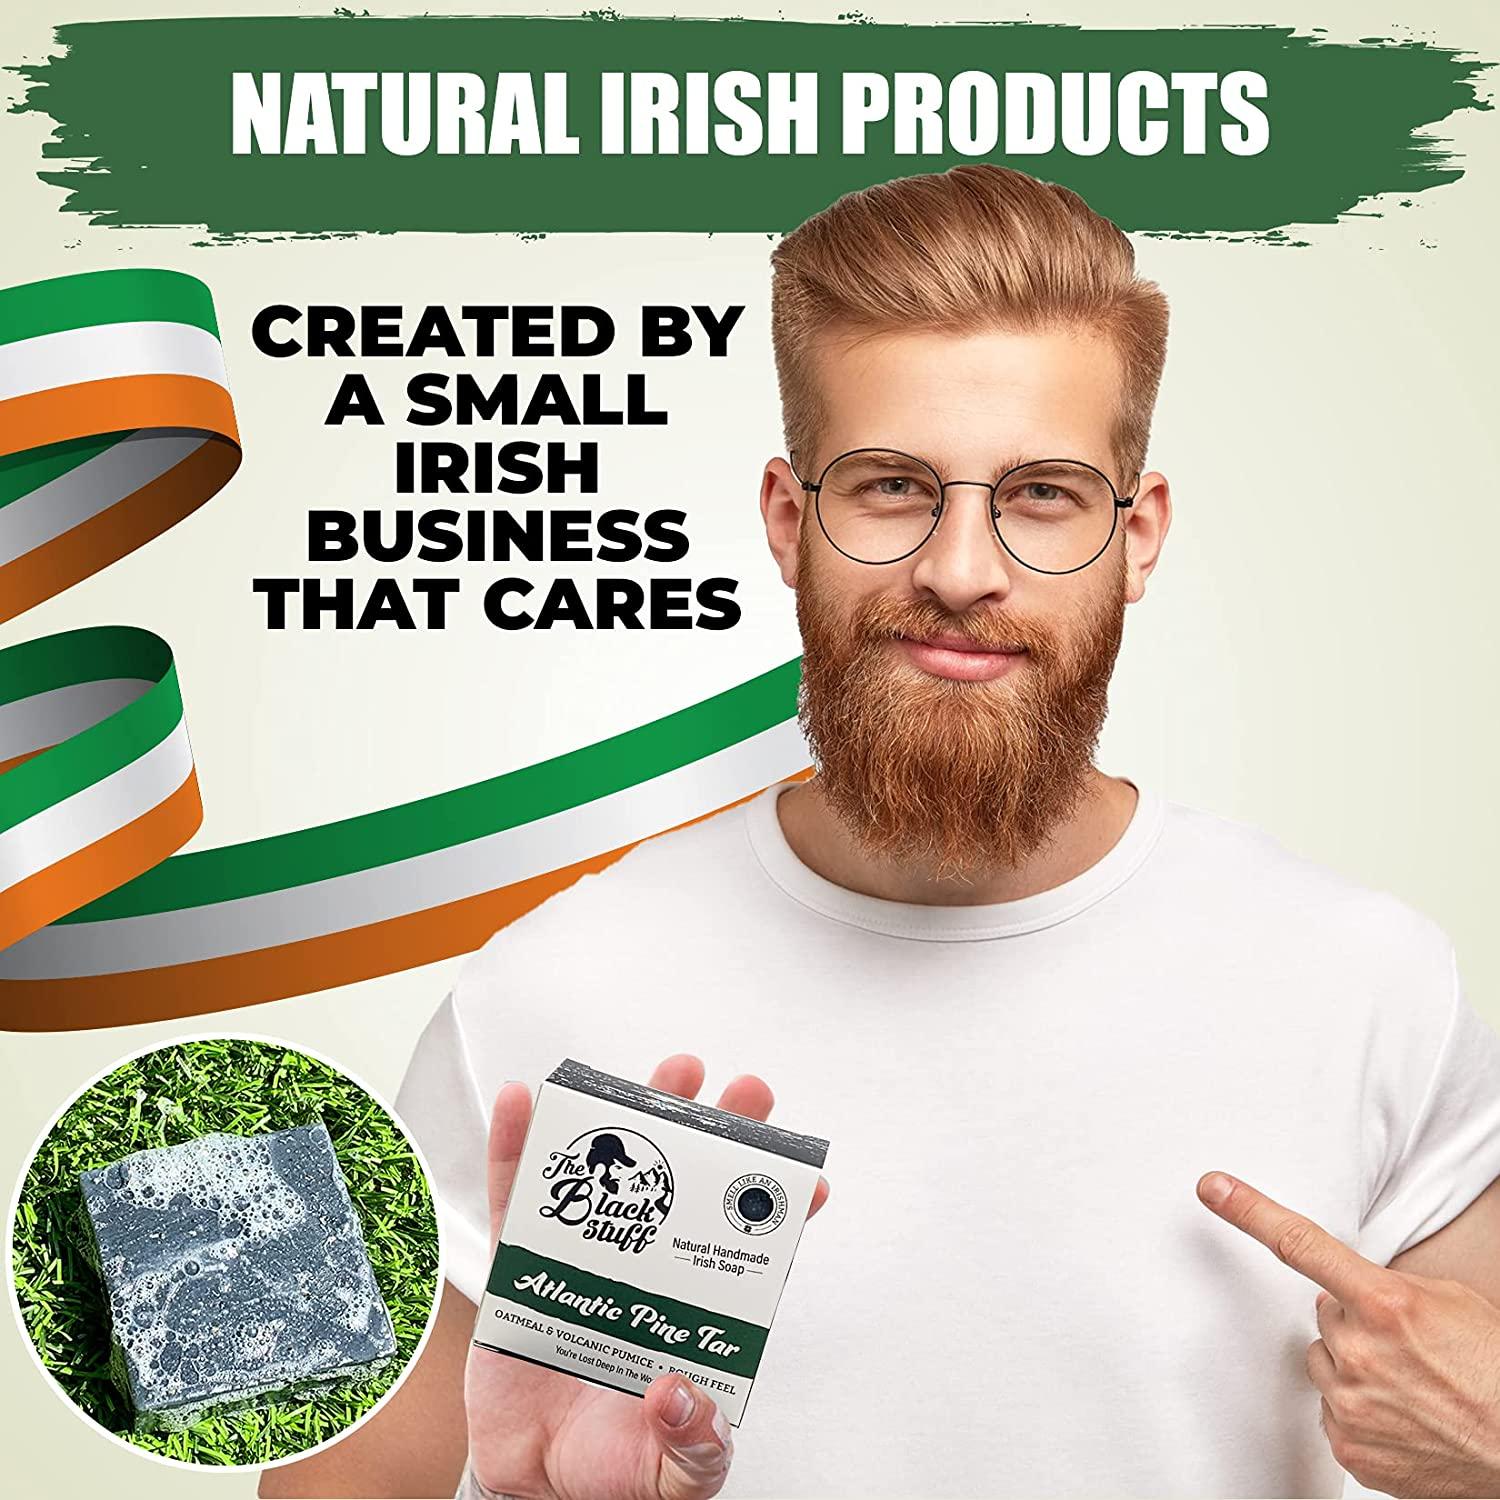 Organic All Natural Pine Tar Soap – Soap Dudes